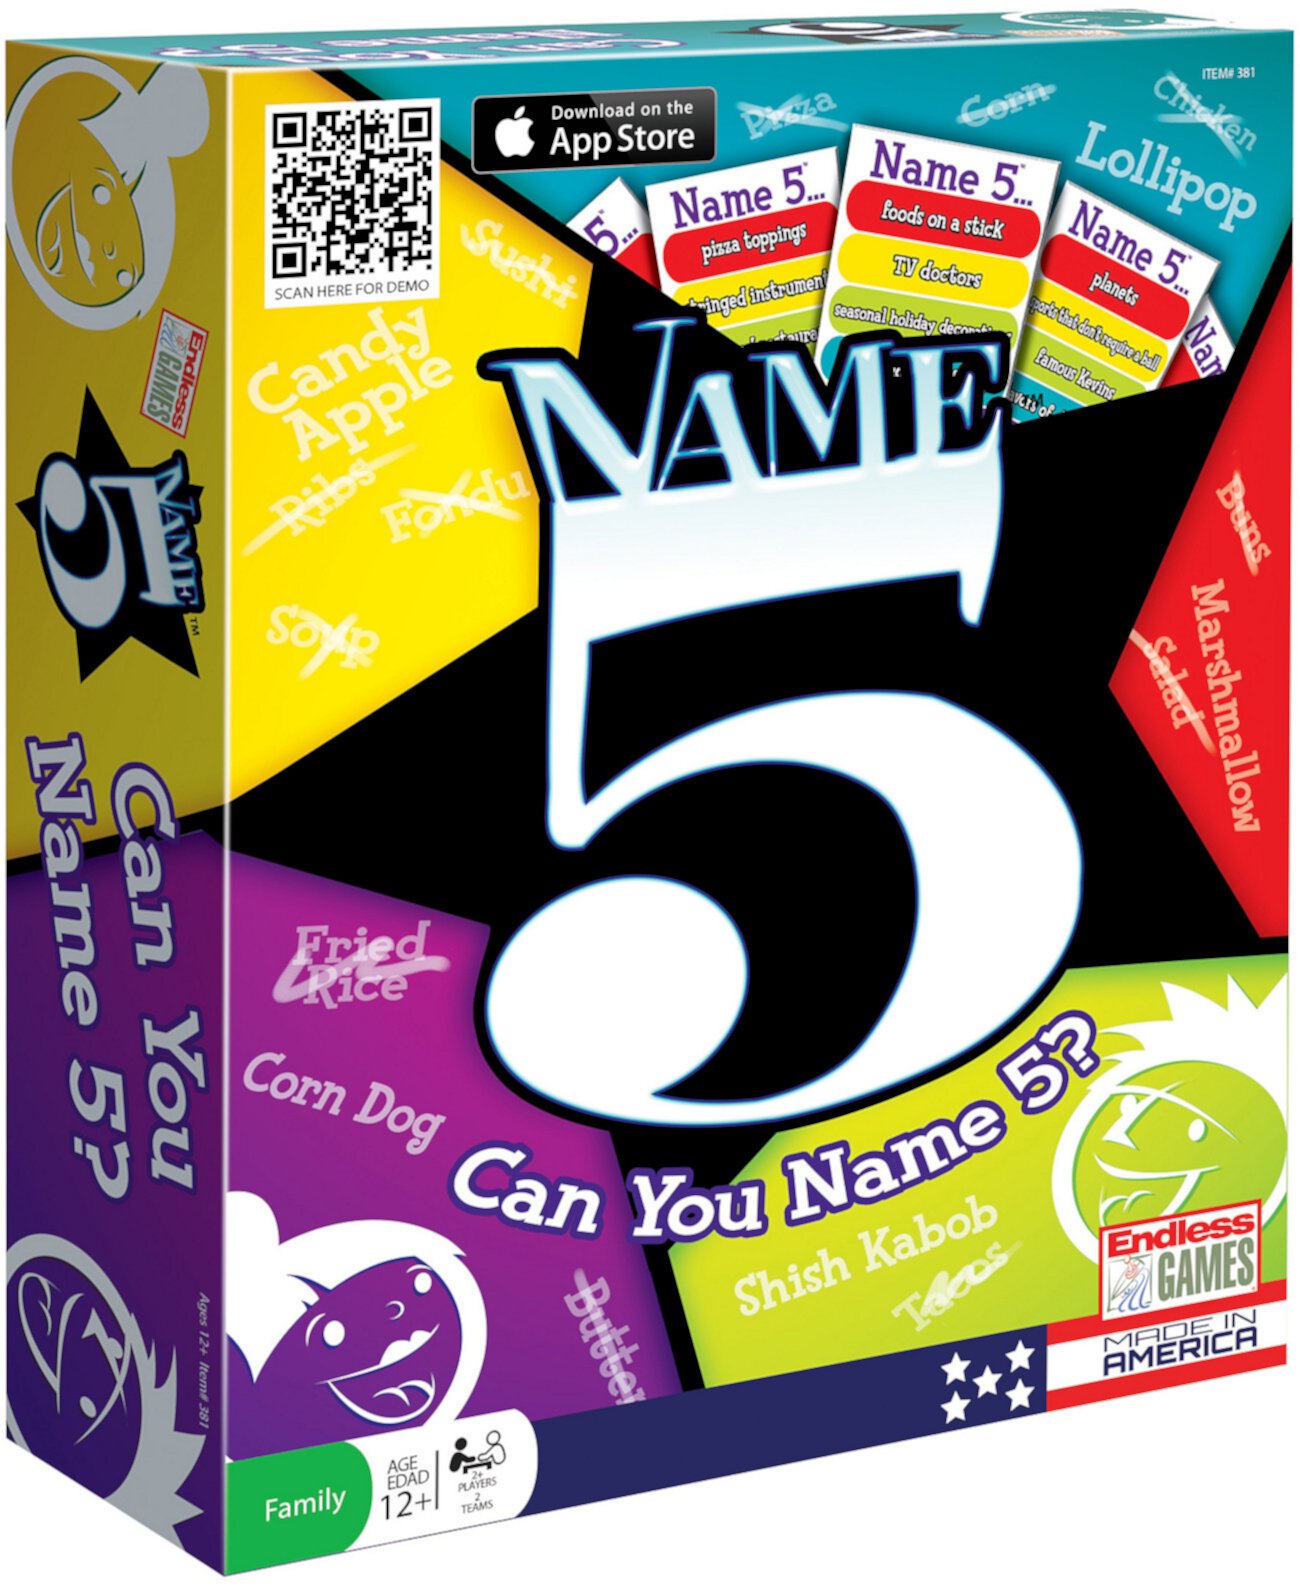 Name Five game. Name 5 game. Name 5 things Board game. Name 5 game Cards.